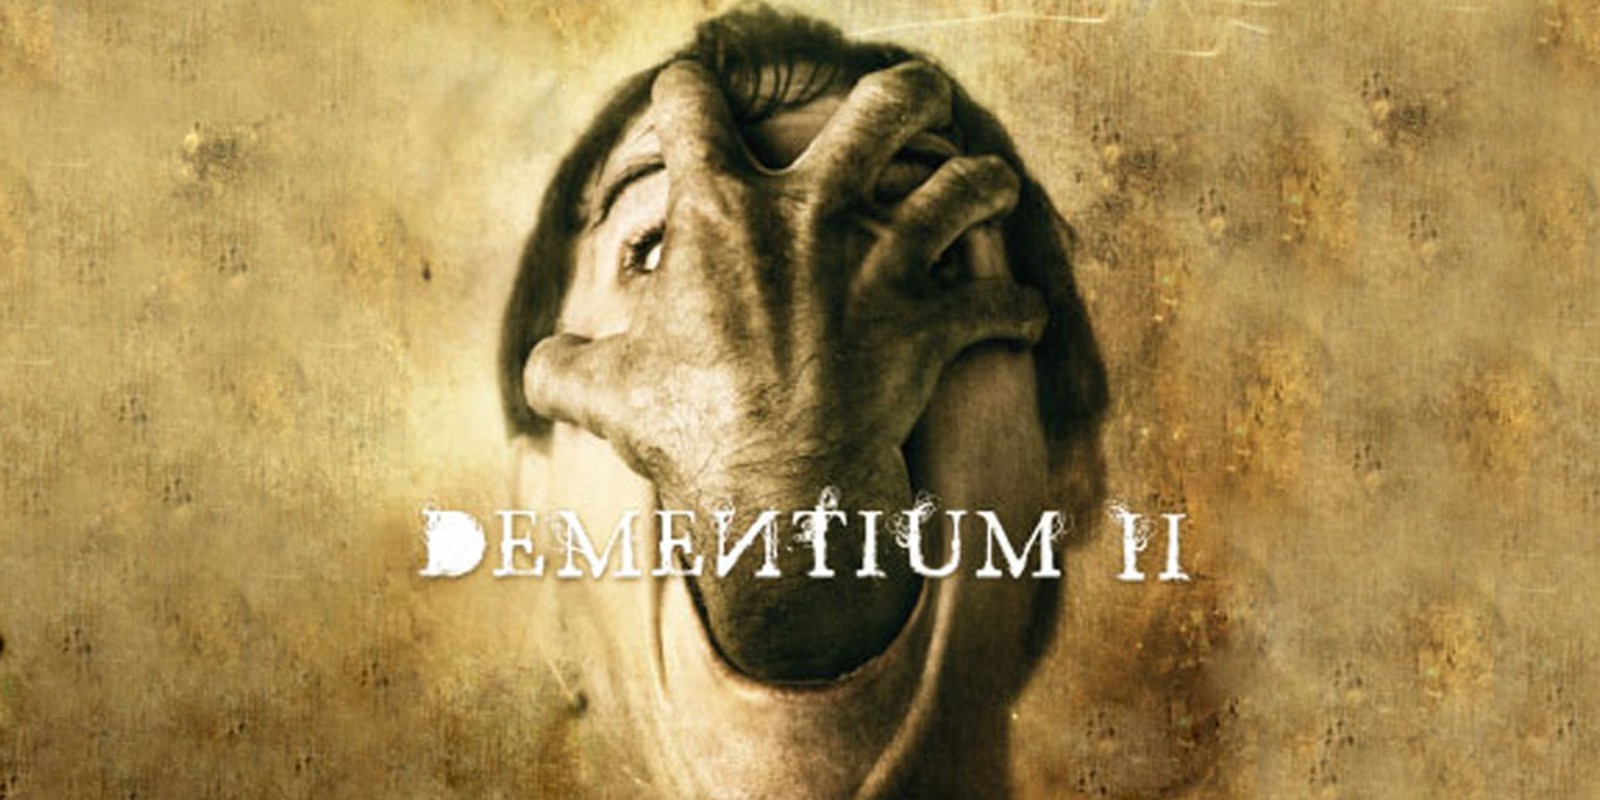 dementium 2 nintendo ds download free